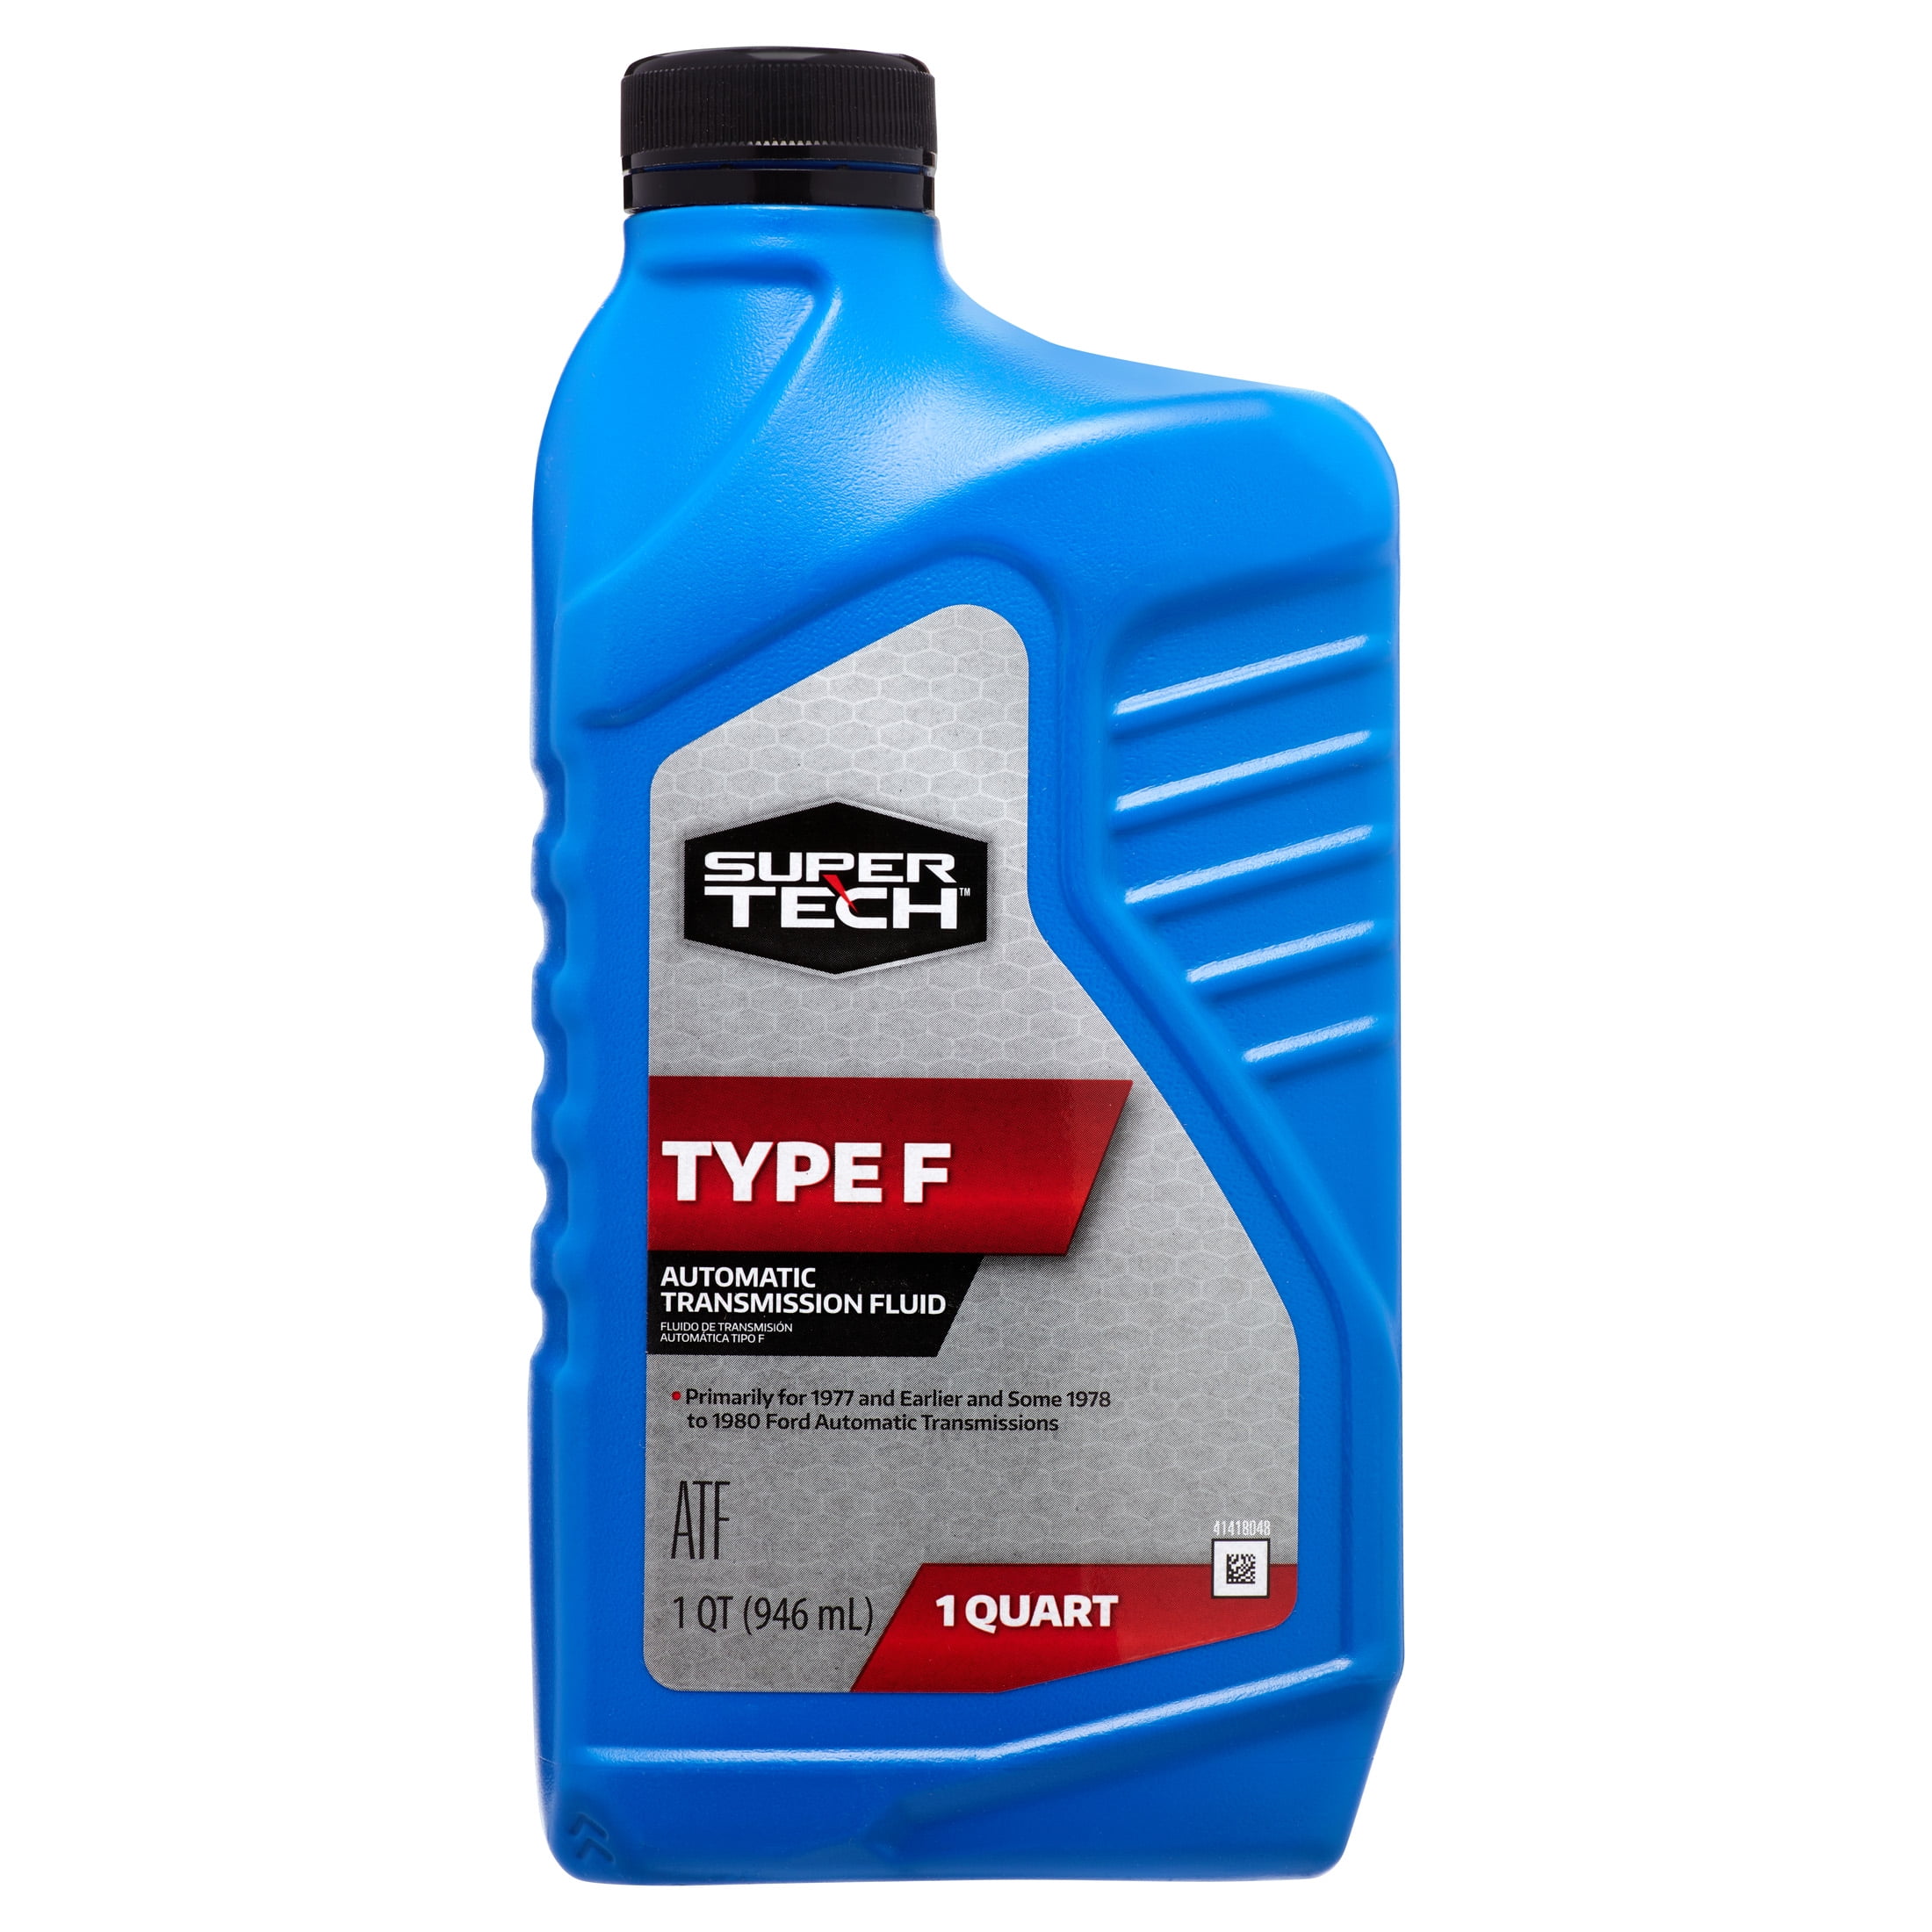 Super Tech Full Synthetic Automatic Transmission Fluid 1 qt. Bottle